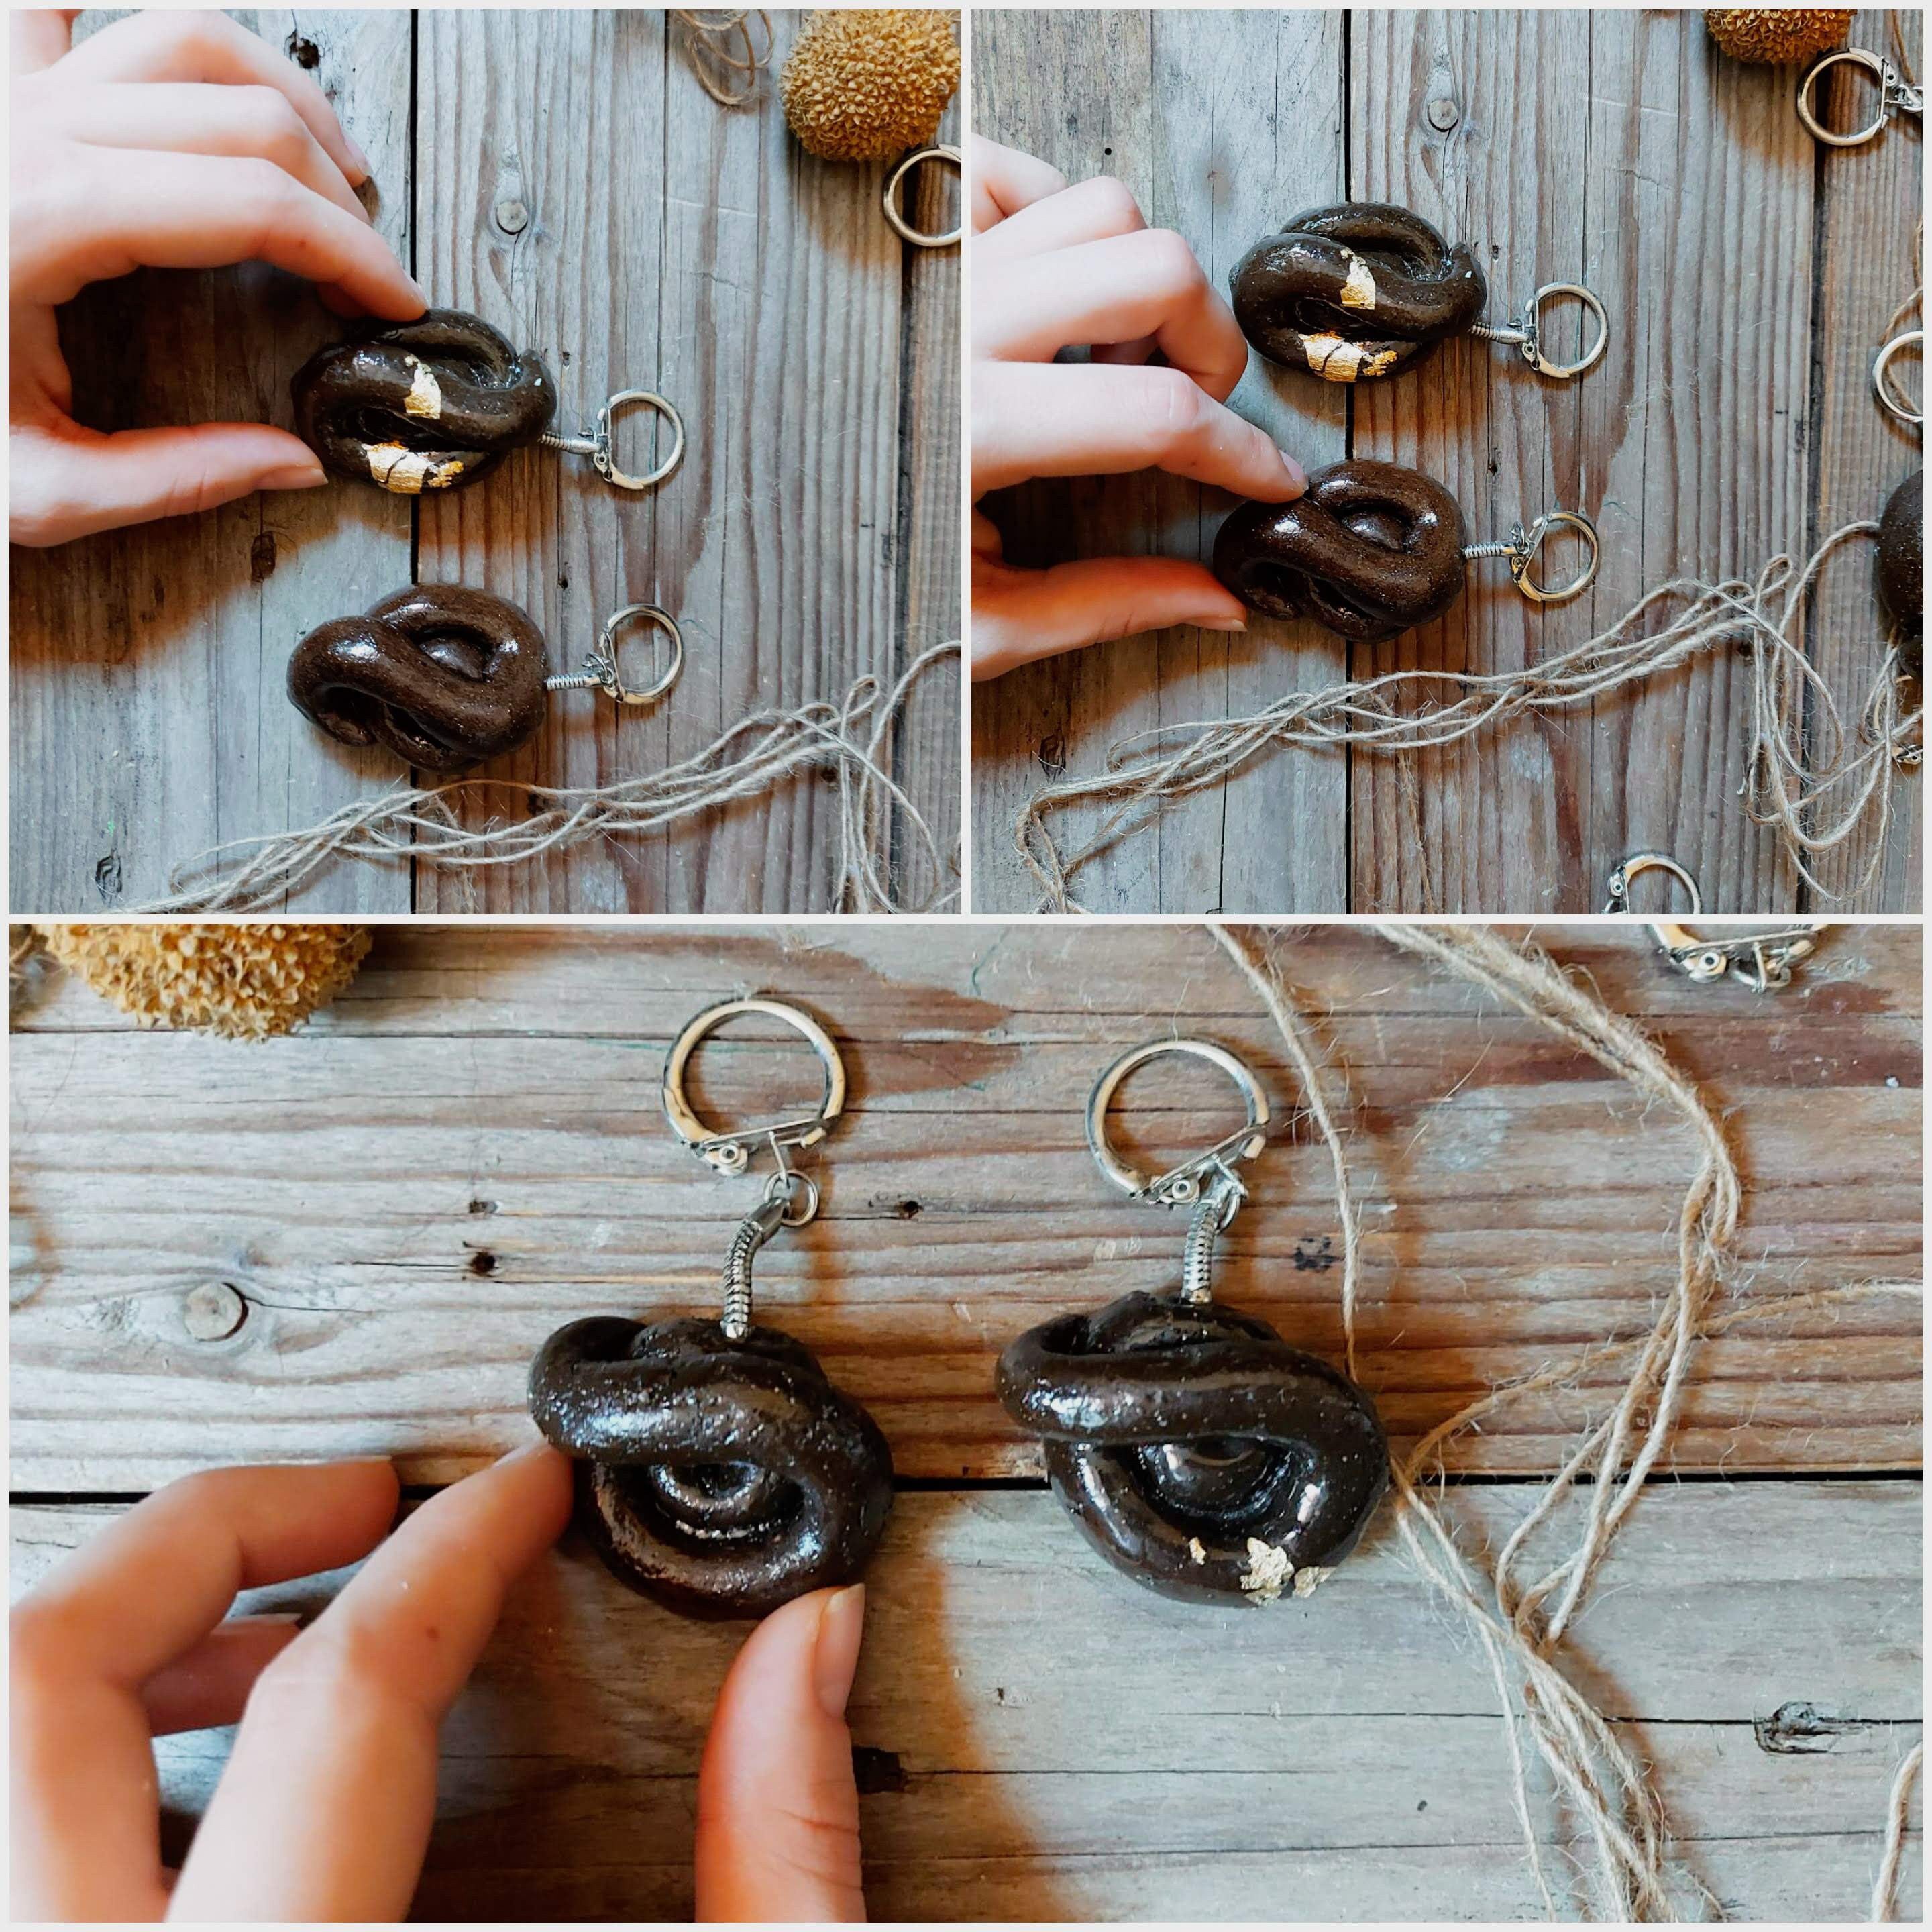 Key Chain Poop Hanging Gifts Keychain Backpack Ring Dark Pendants Keyring  Shape Favors Birthday Novelty Holder 